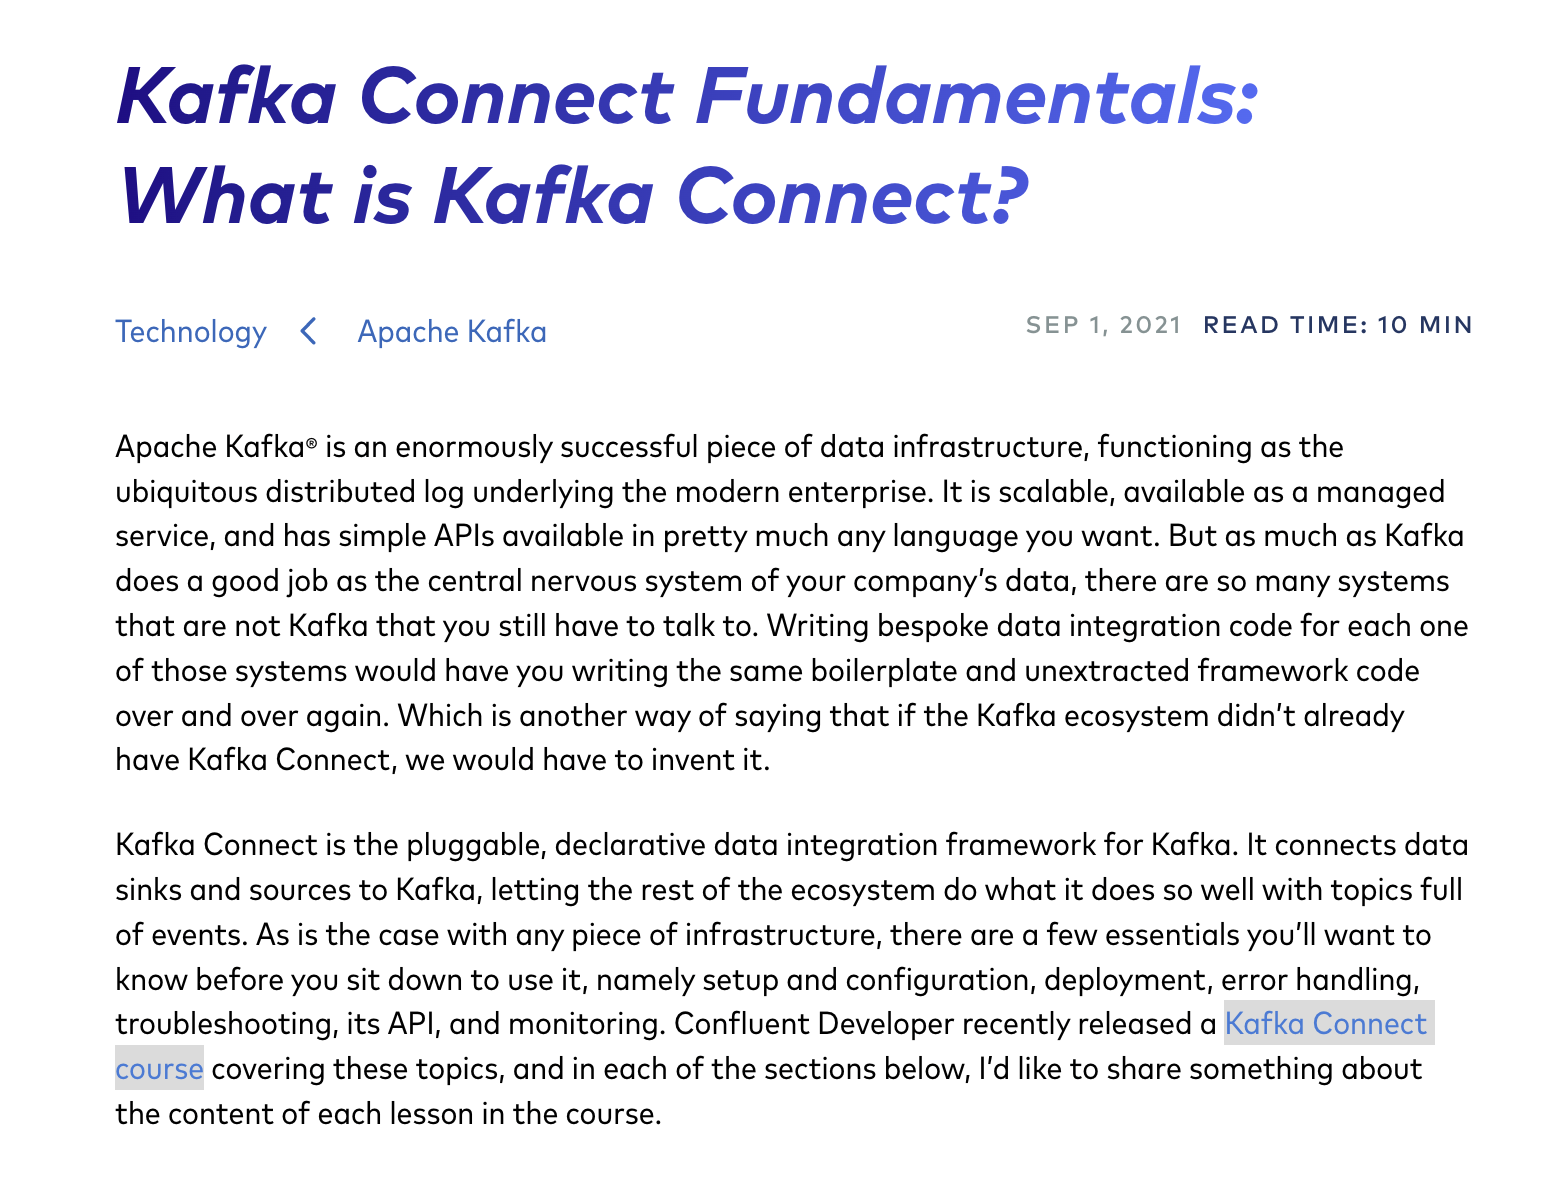 Confluent’s Kafka Connect tutorial blog post